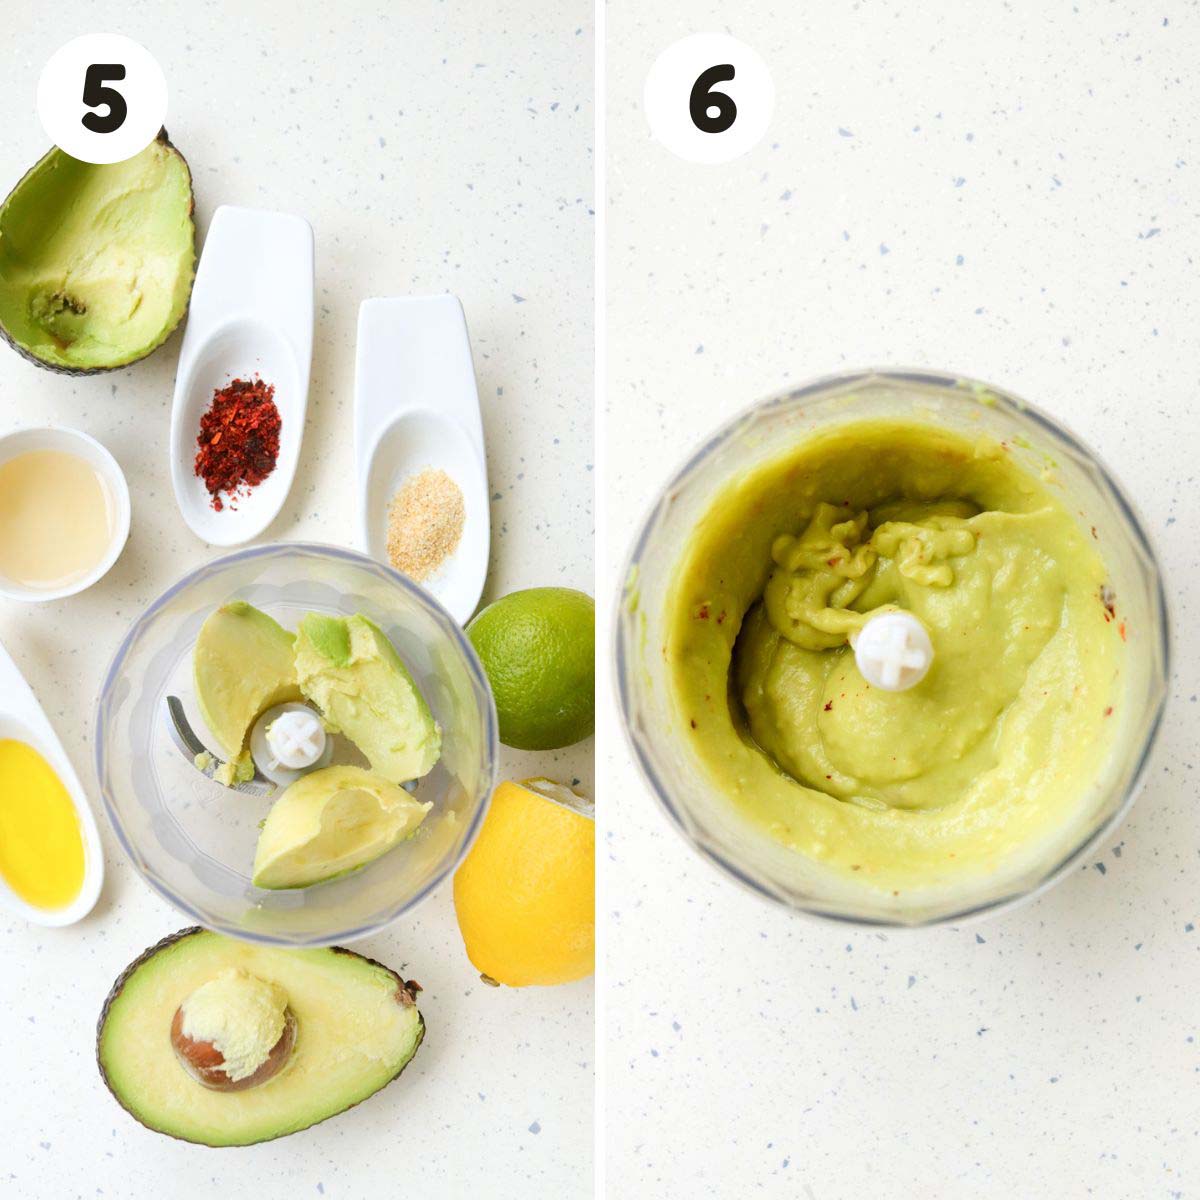 Steps to make the avocado sauce.